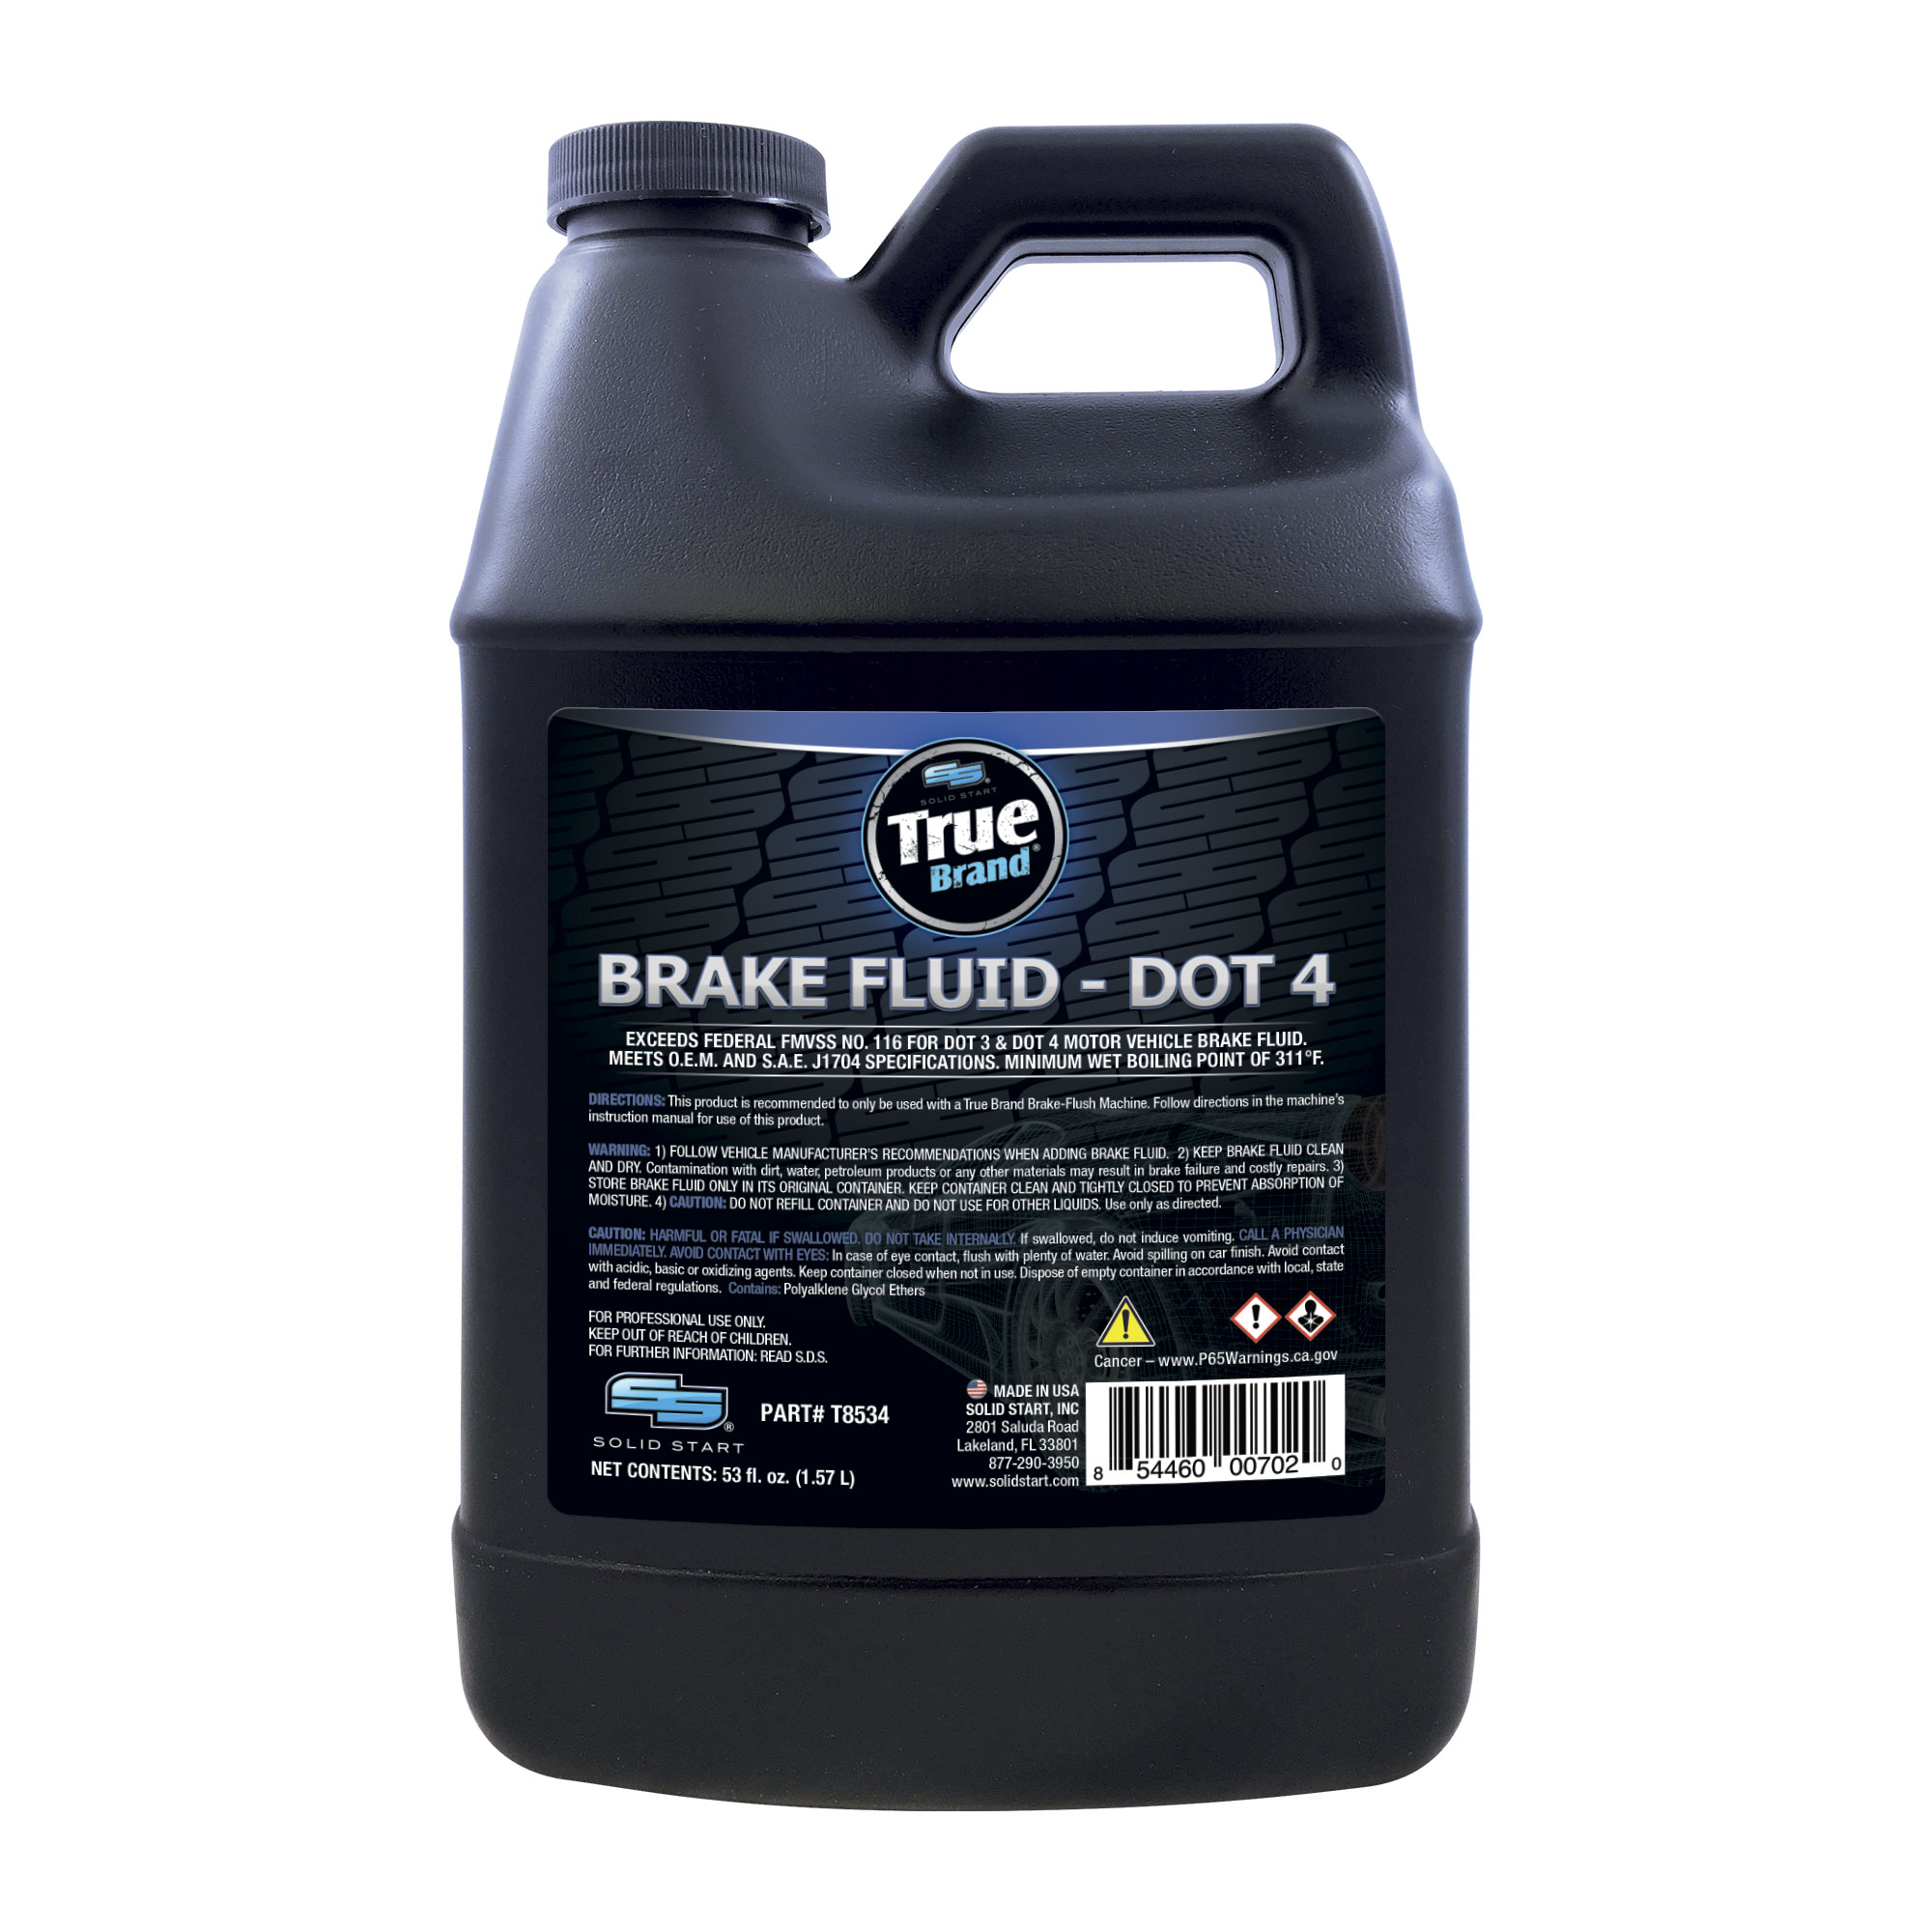 Which DOT4 brake fluid?